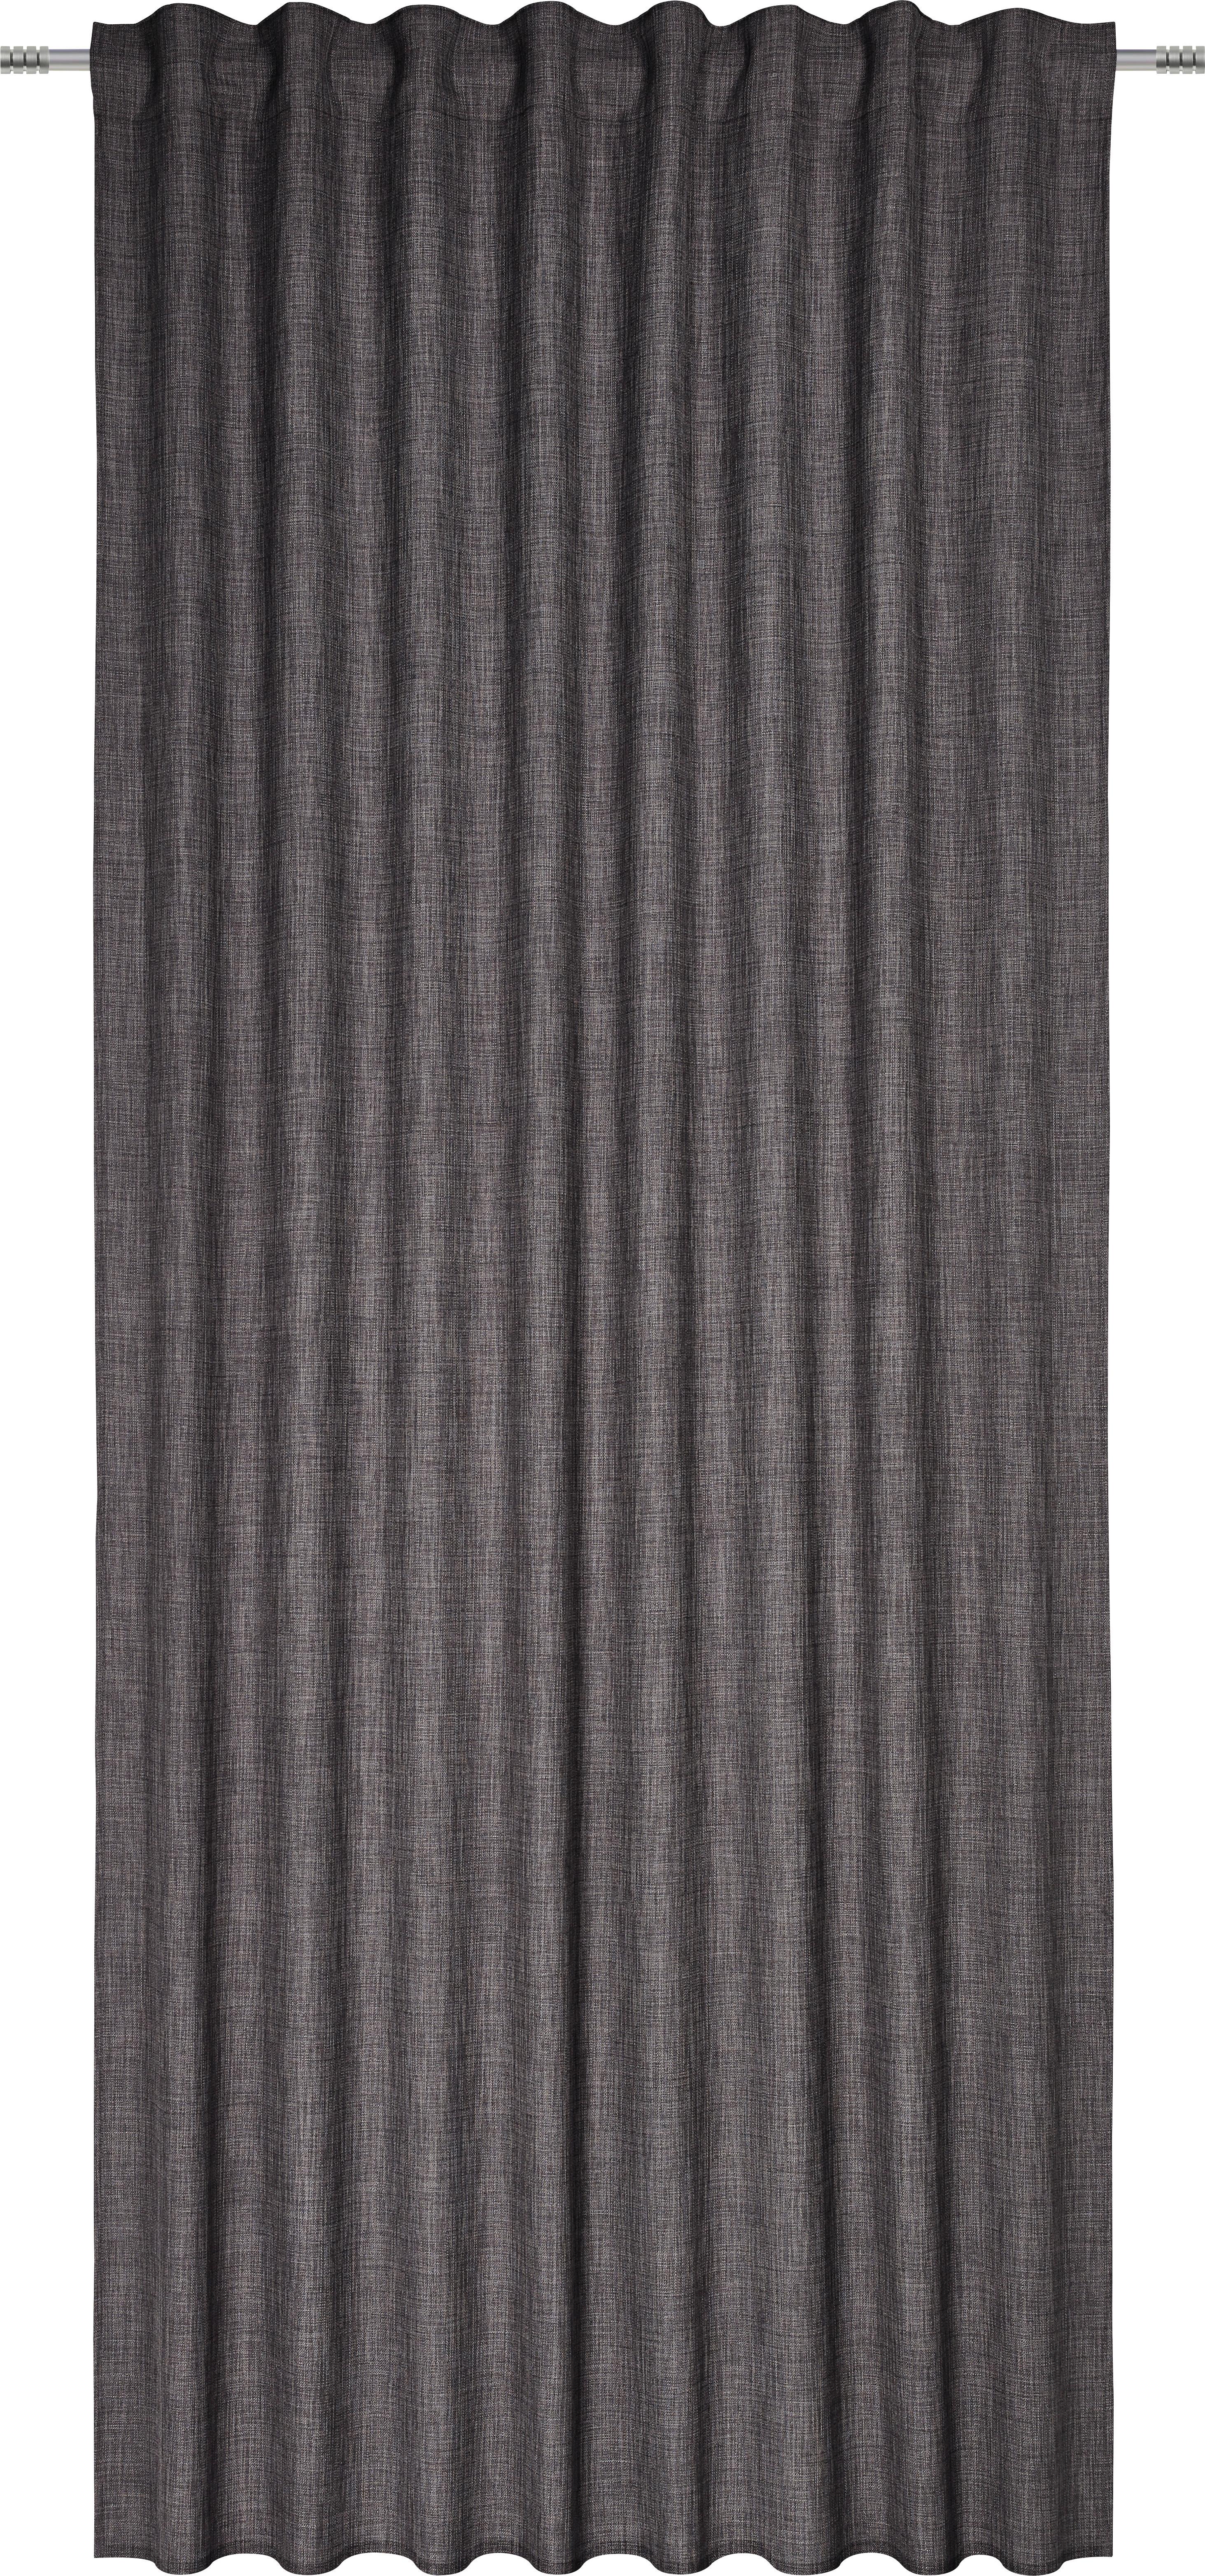 Perdea prefabricată Leo - gri, textil (135/255cm) - Premium Living